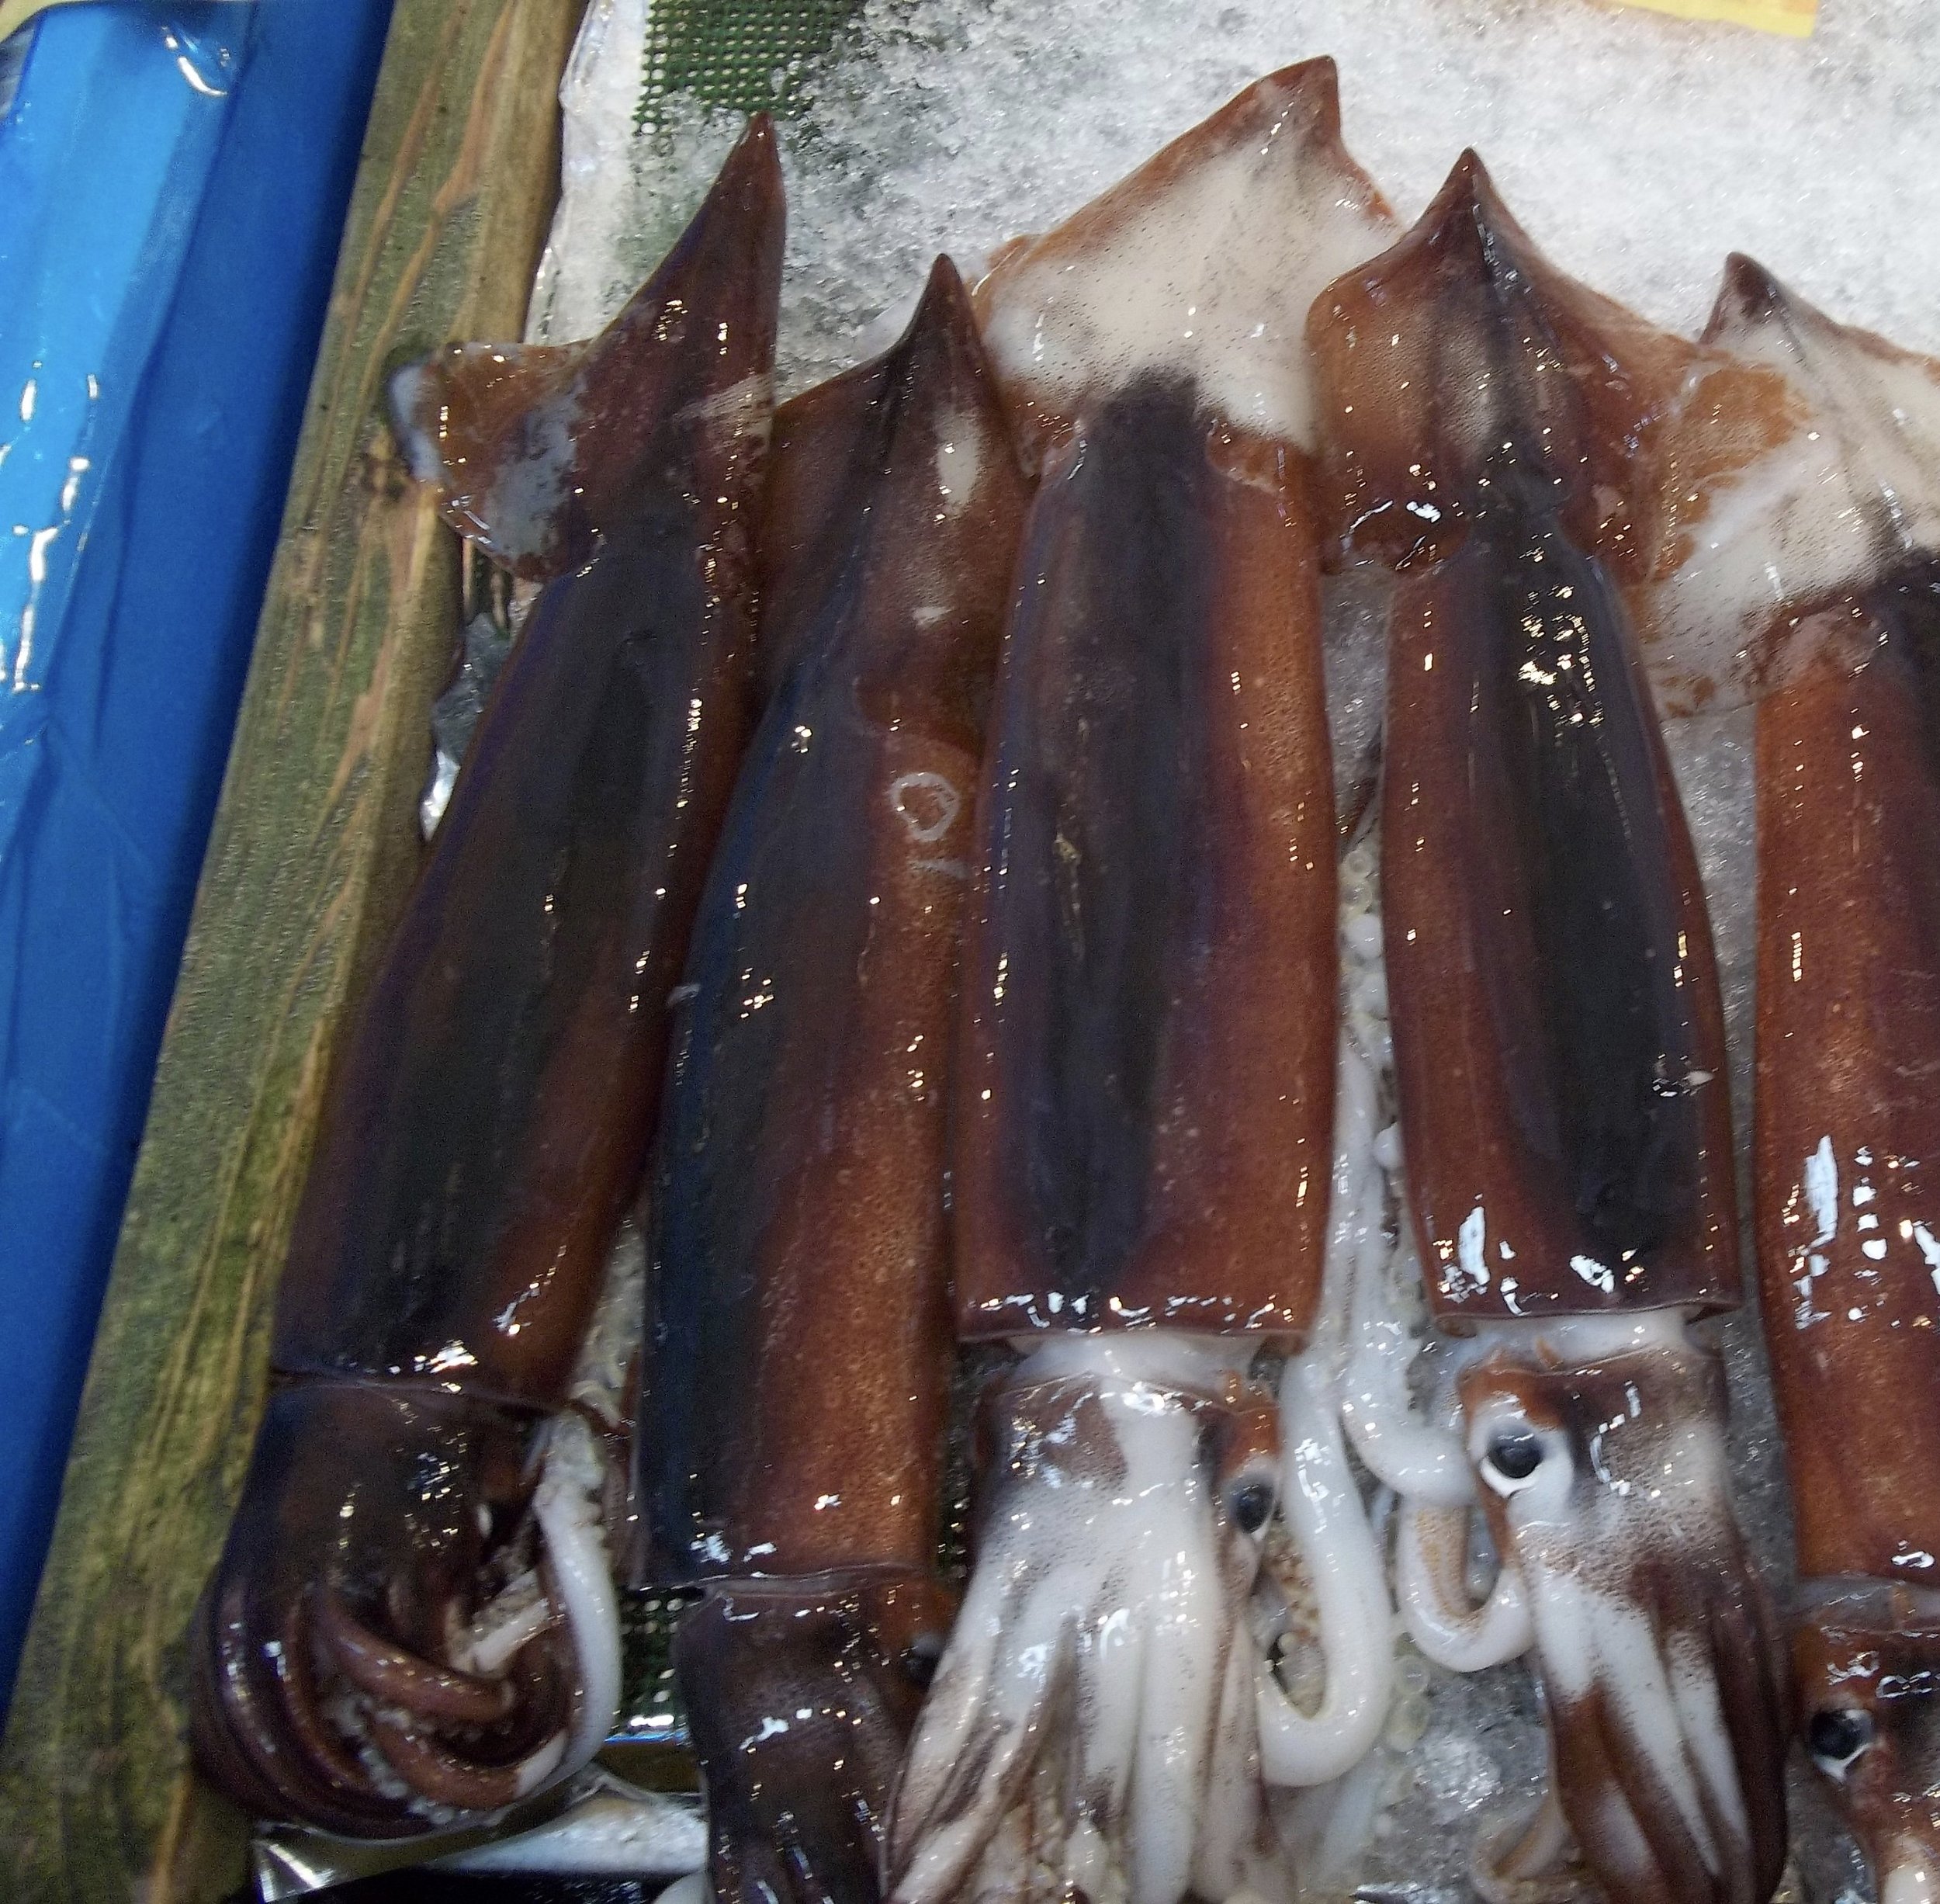 Fresh caught squid at the market